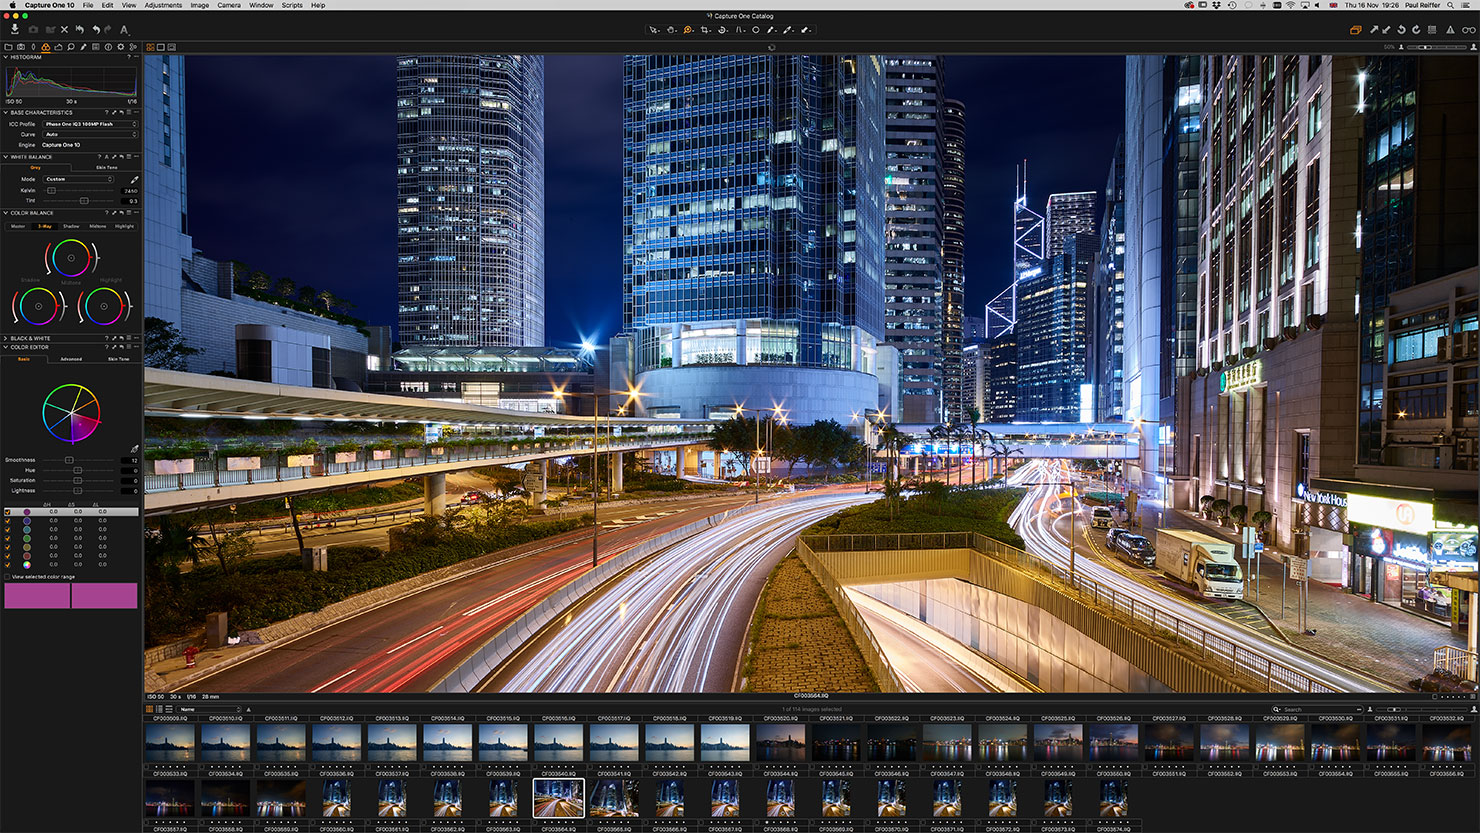 Capture One Pro 10 BTS Paul Reiffer Photographer Phase One Ambassador Image Quality Screenshot